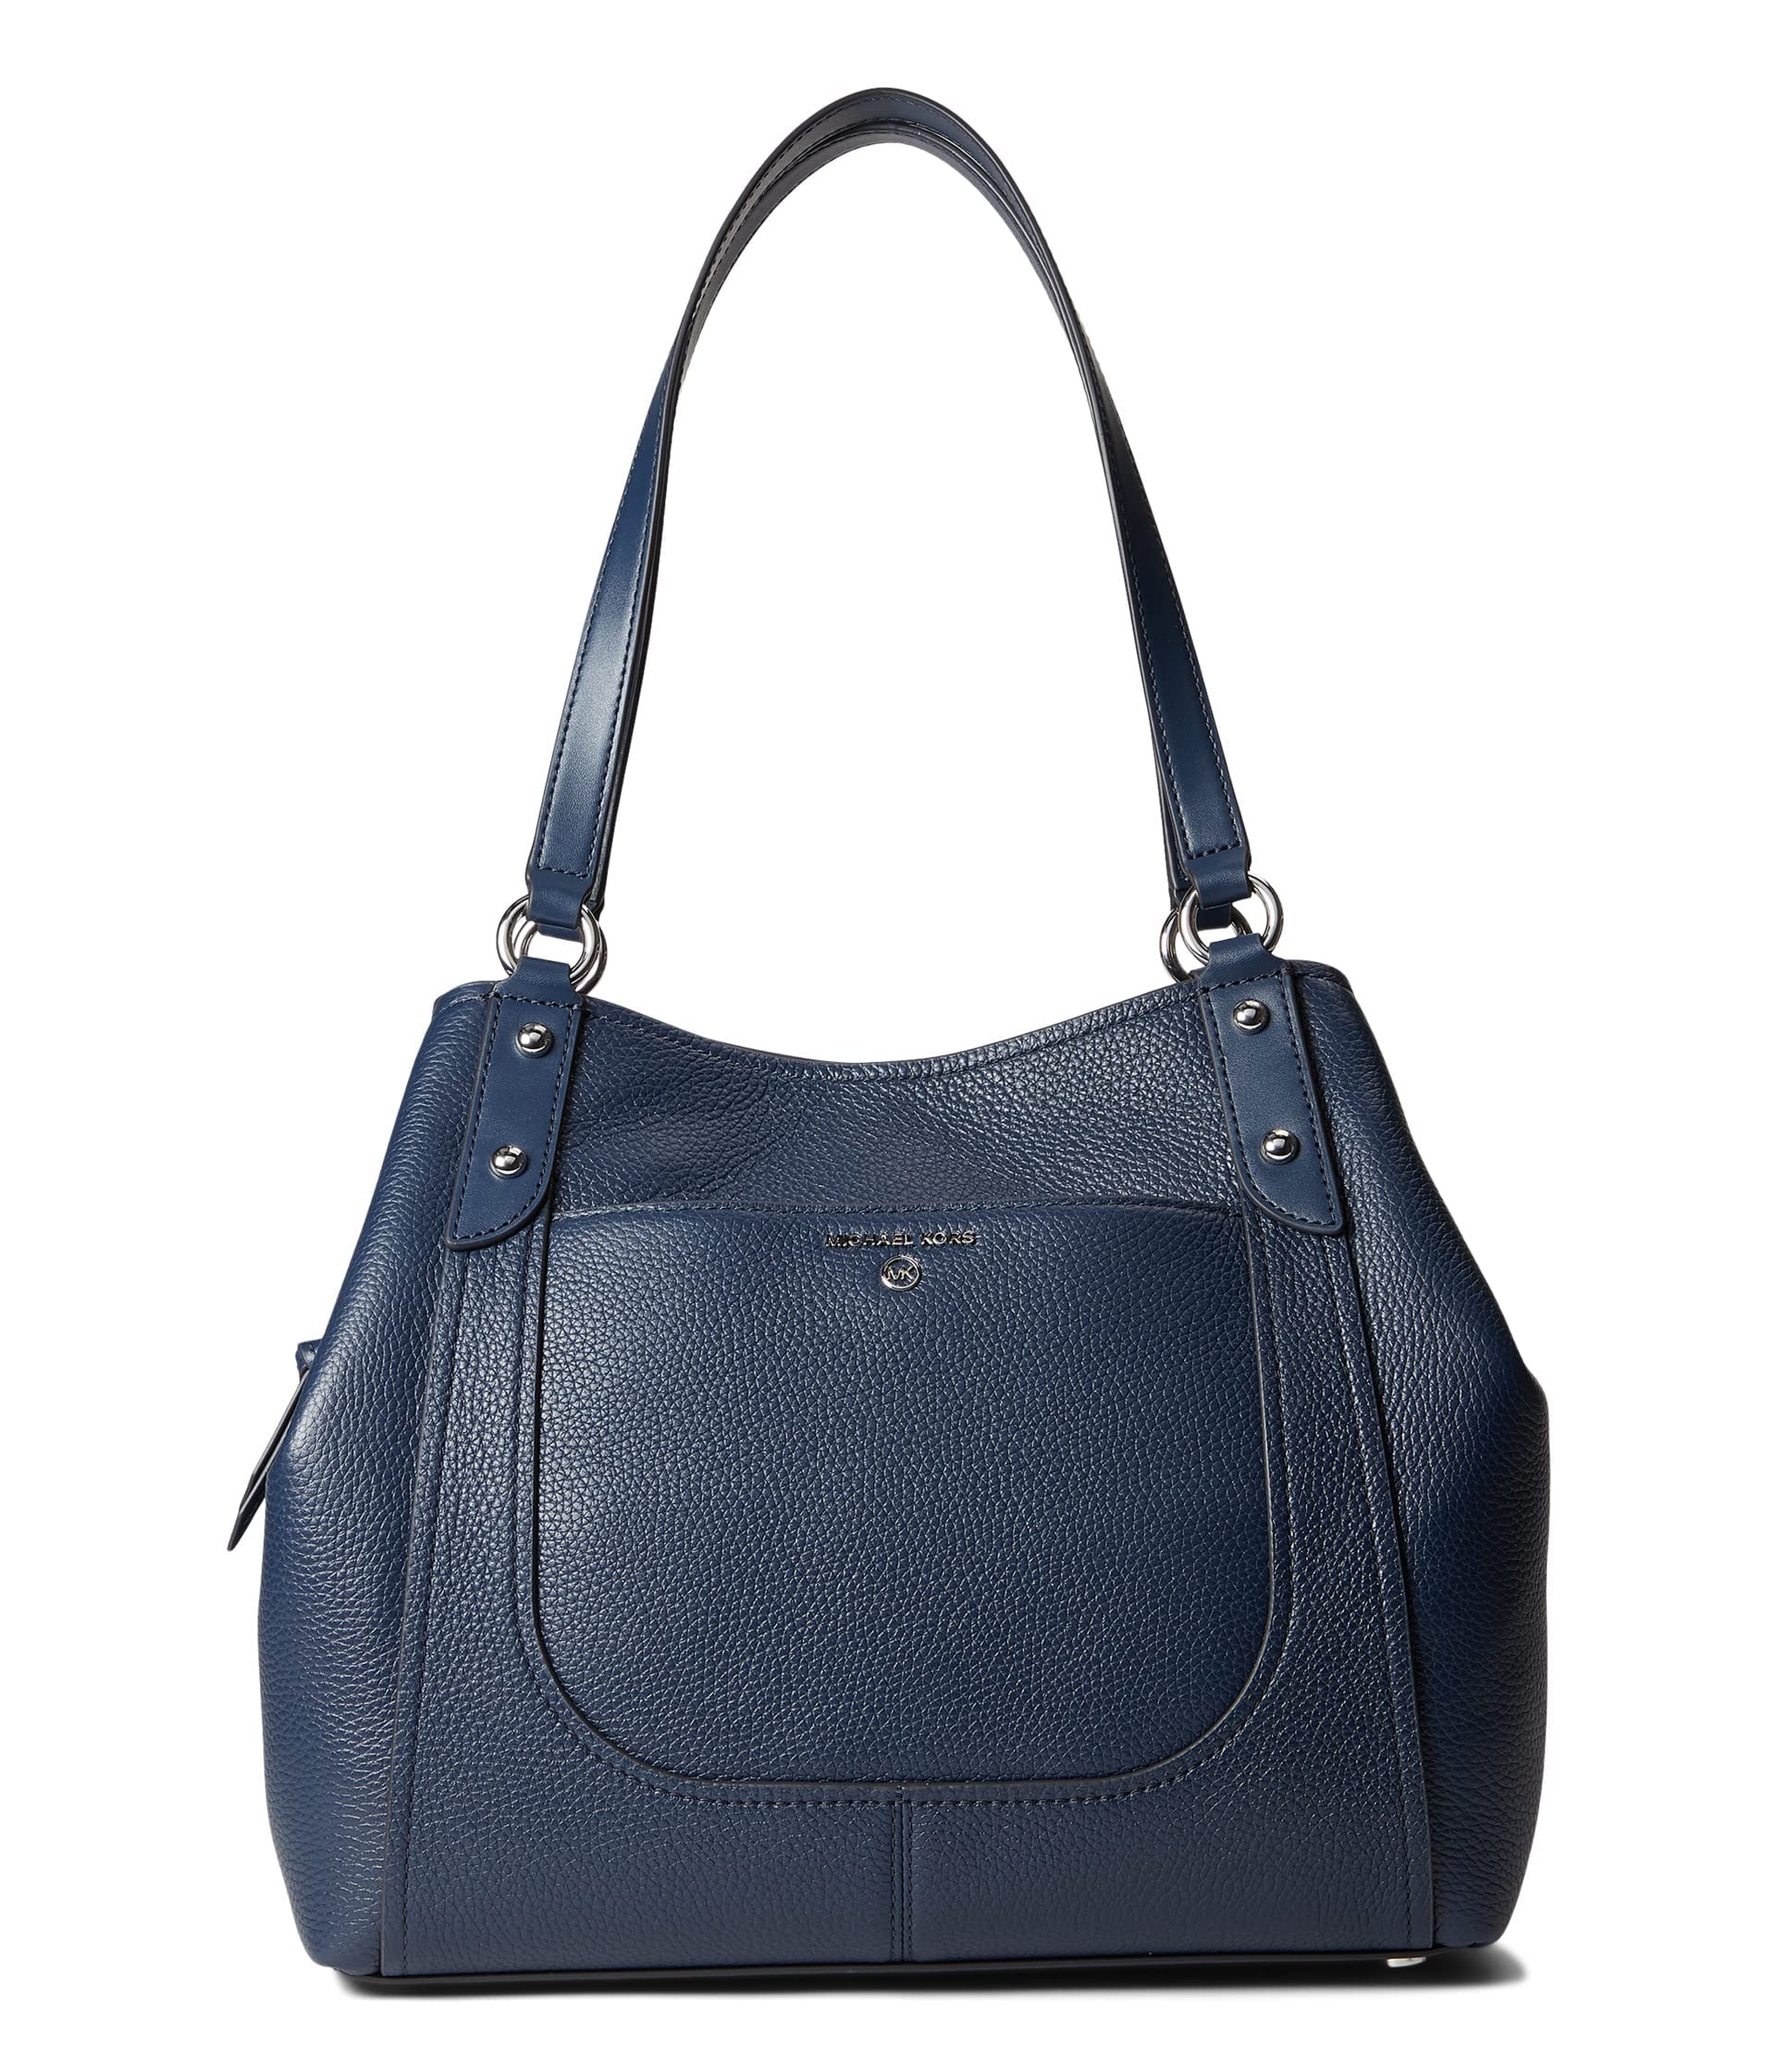 Michael Kors Portia Large Blue Saffiano Leather Shoulder Bag